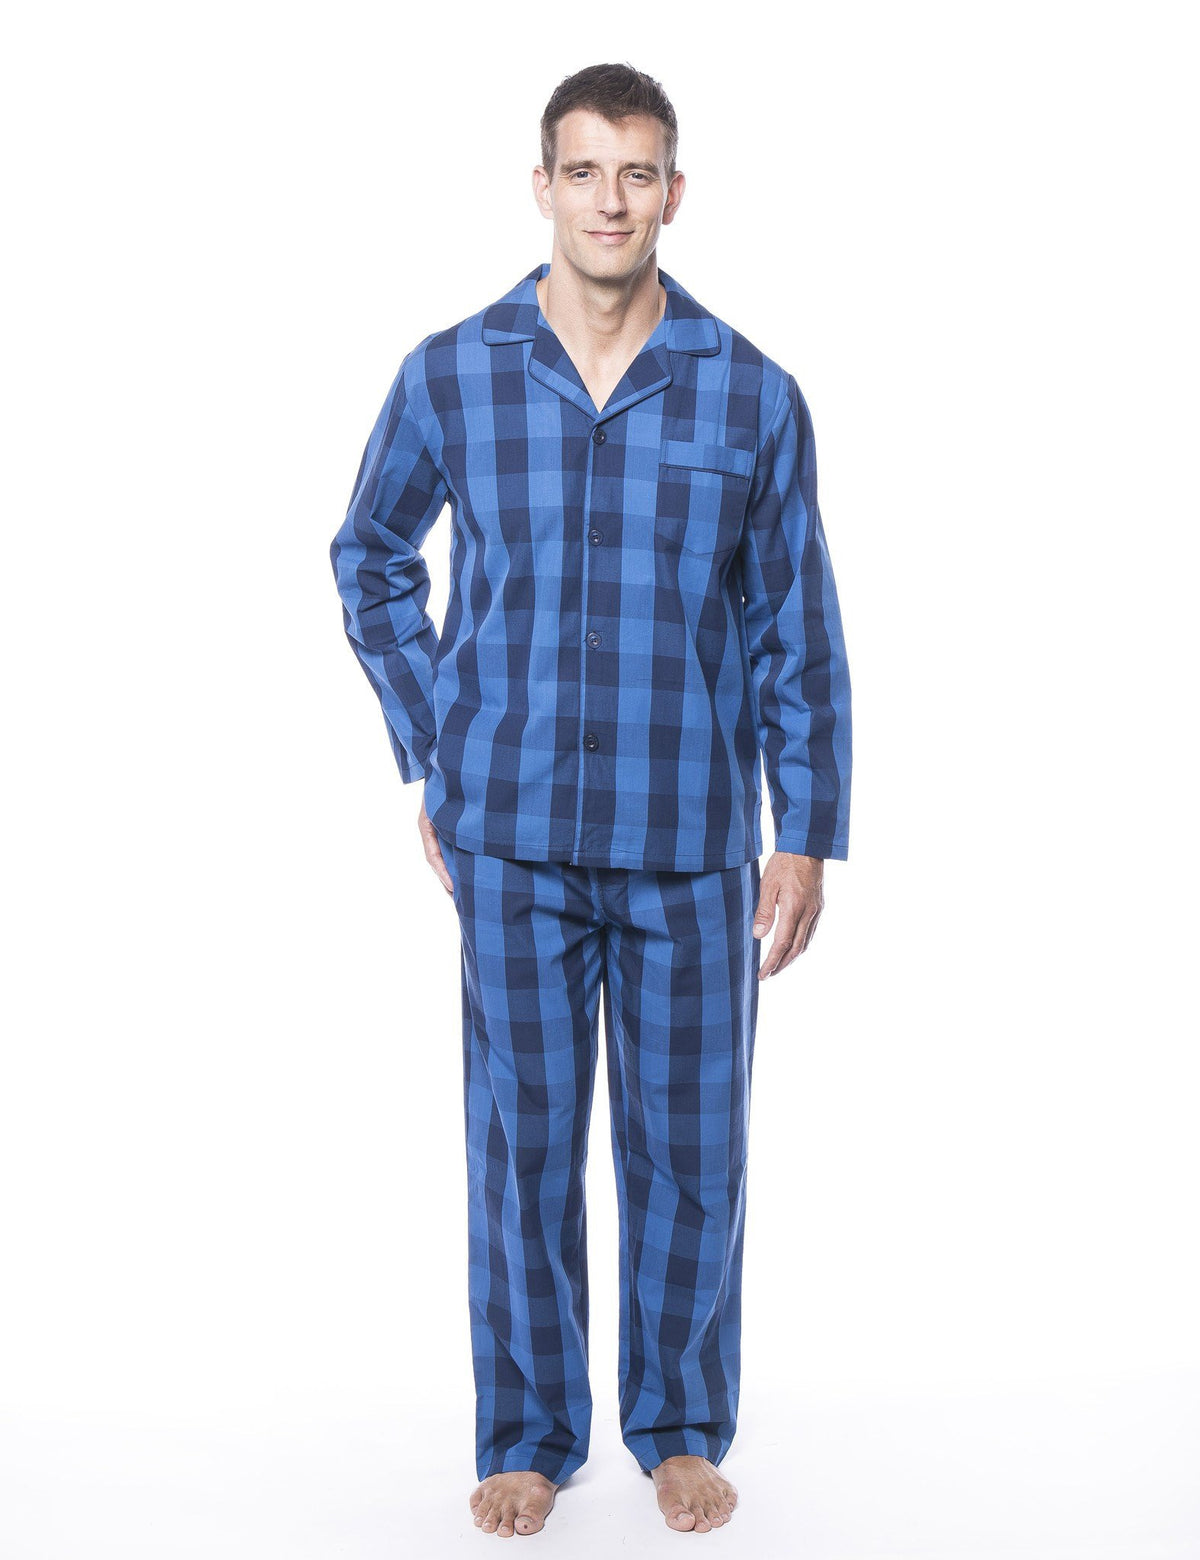 Men's 100% Woven Cotton Pajama Sleepwear Set - Gingham Navy/Blue